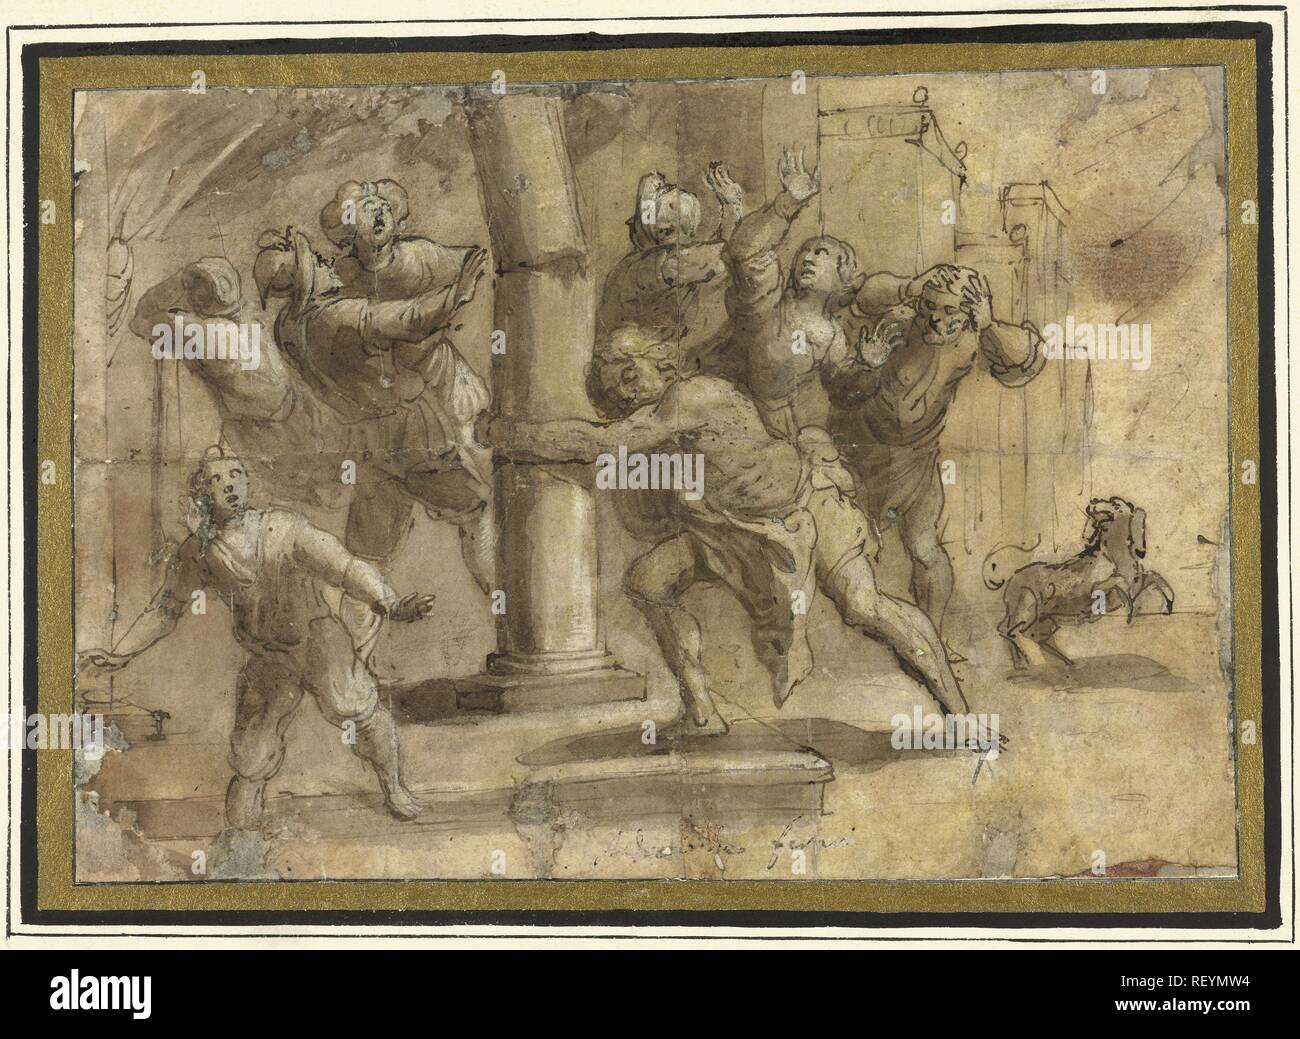 Samson lets the temple collapse. Draughtsman: Gaudenzio Ferrari. Dating: 1481 - 1546. Measurements: h 141 mm × w 204 mm. Museum: Rijksmuseum, Amsterdam. Stock Photo